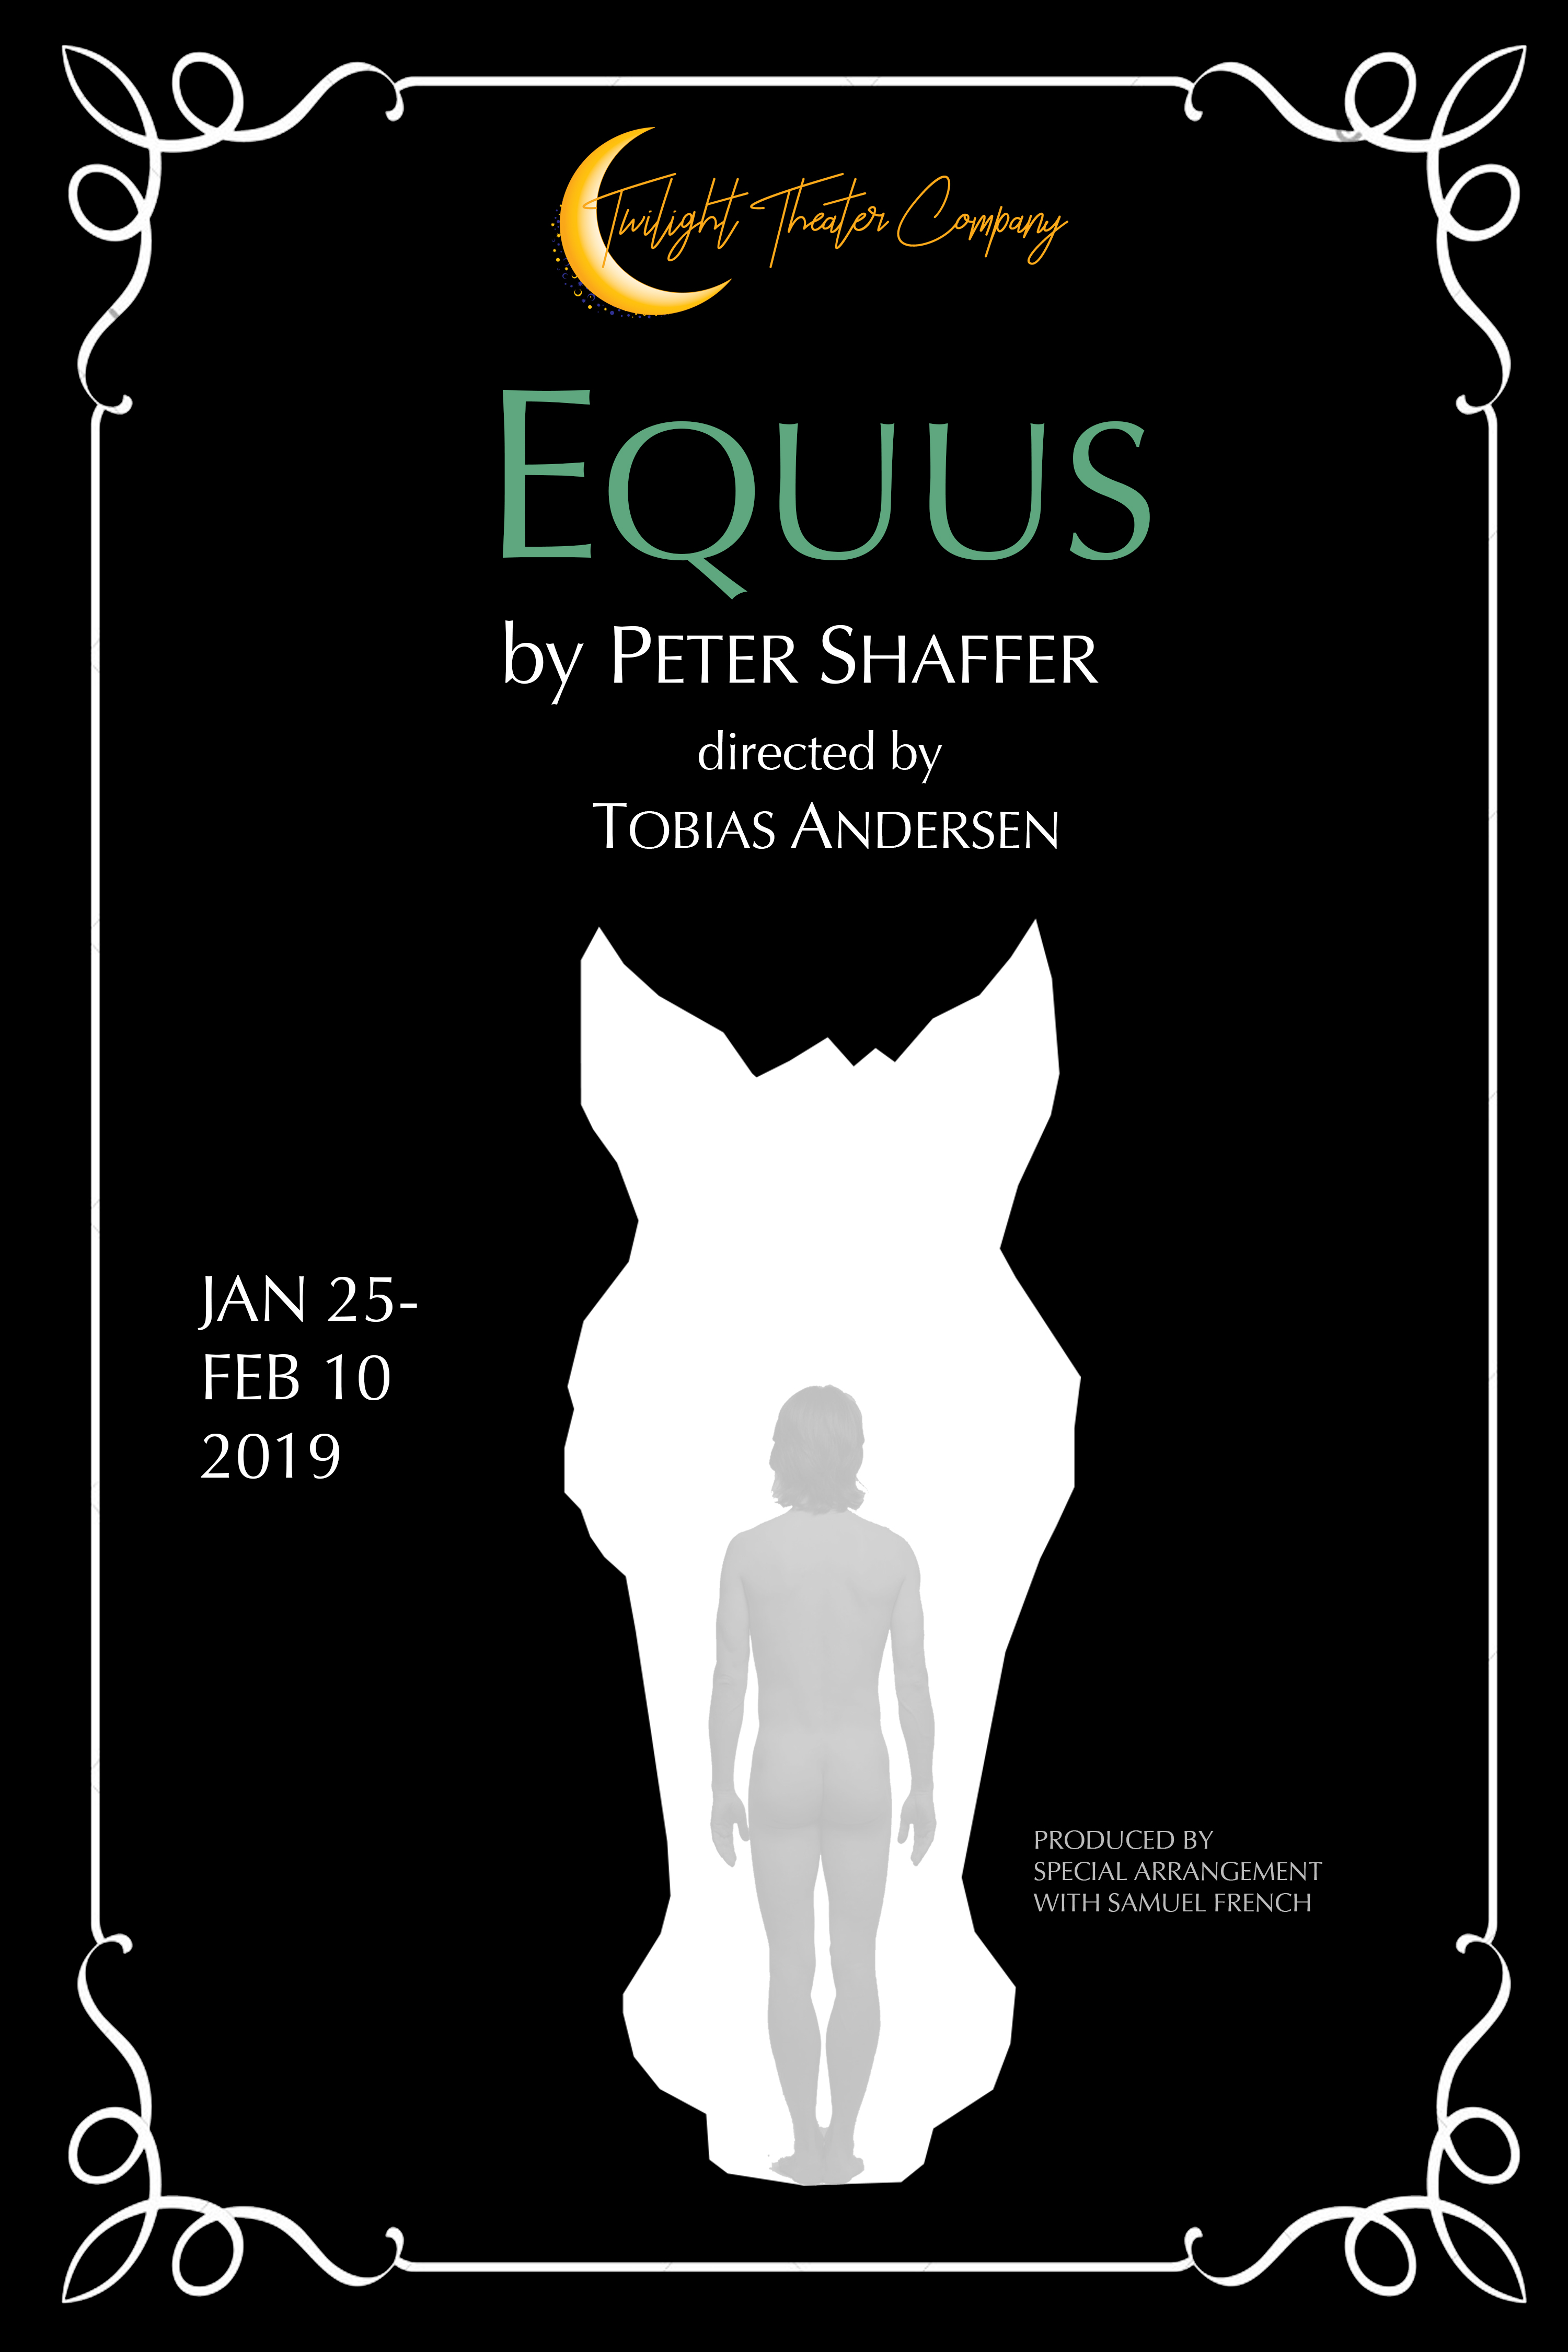 Equus at Twilight Theater Company